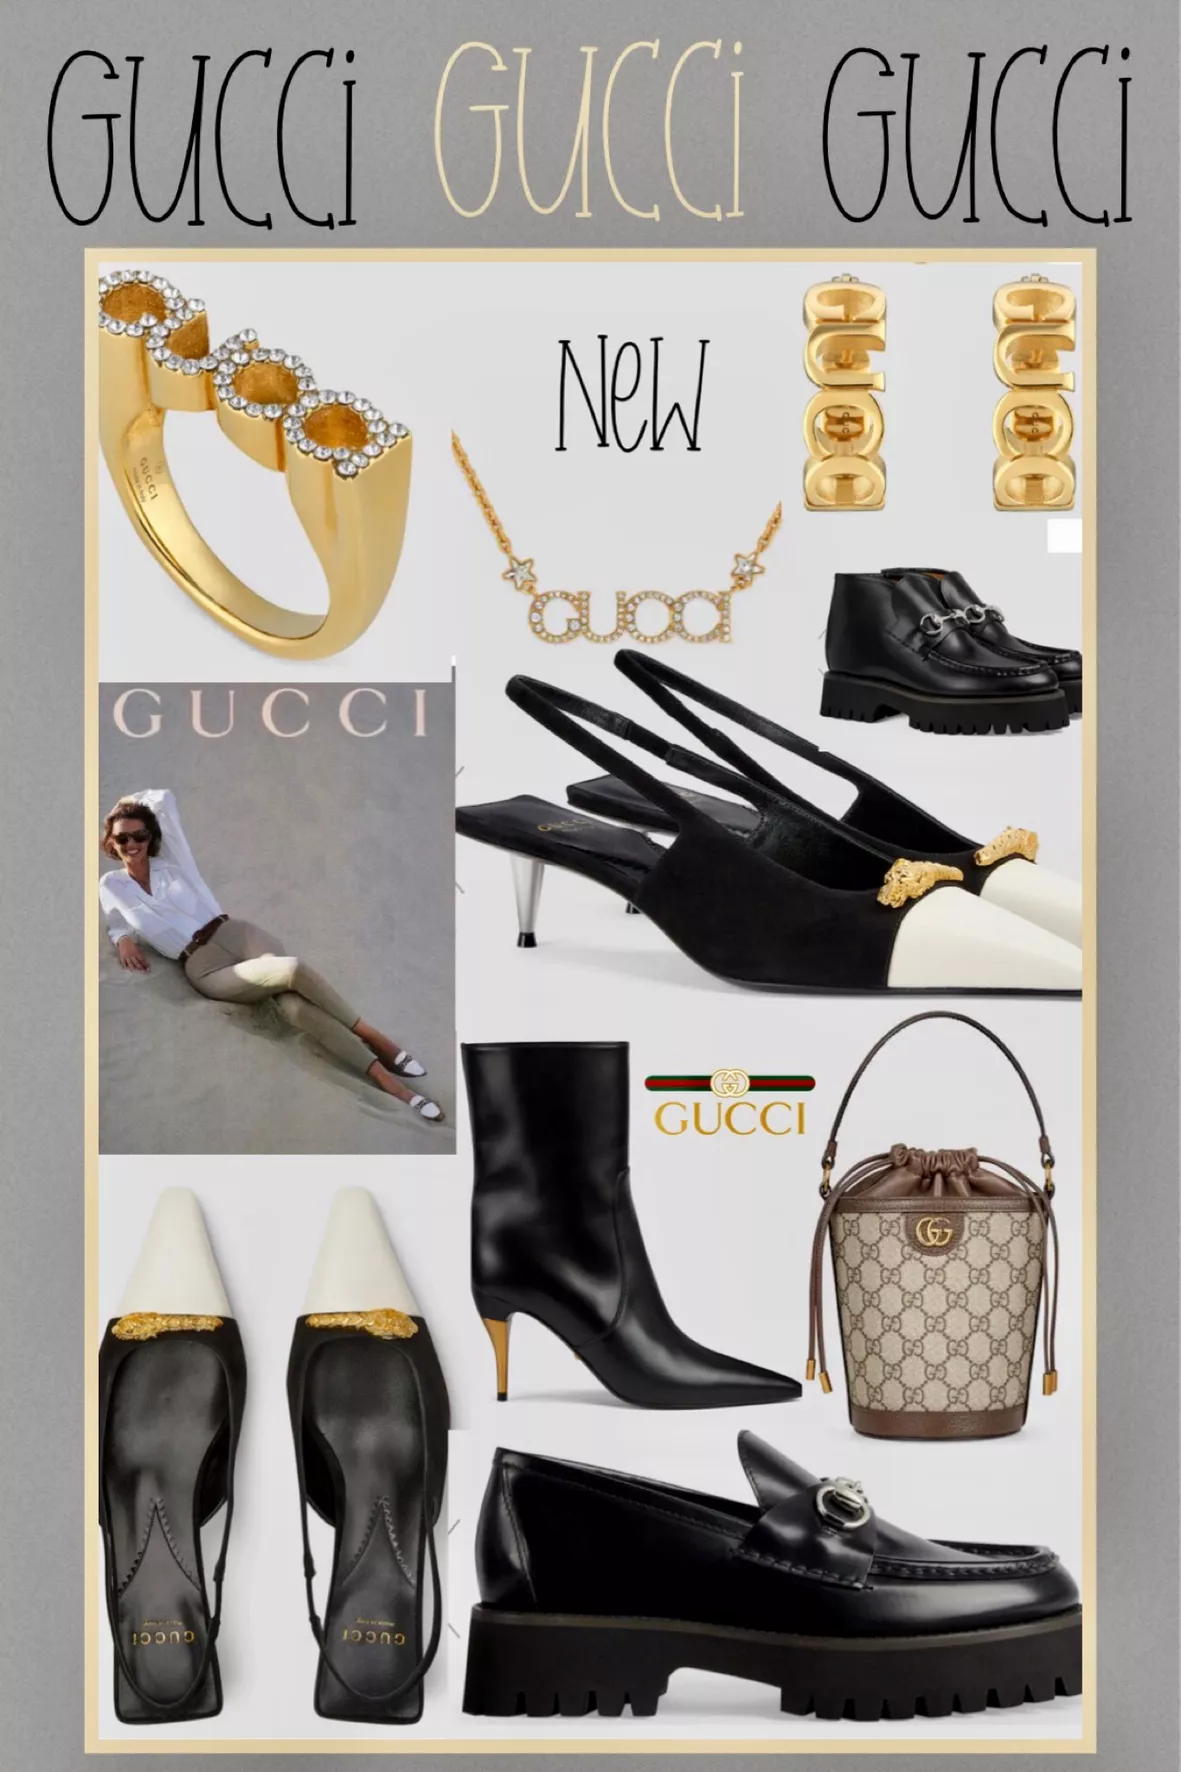 Gucci Handbags for Women, Women's Designer Handbags